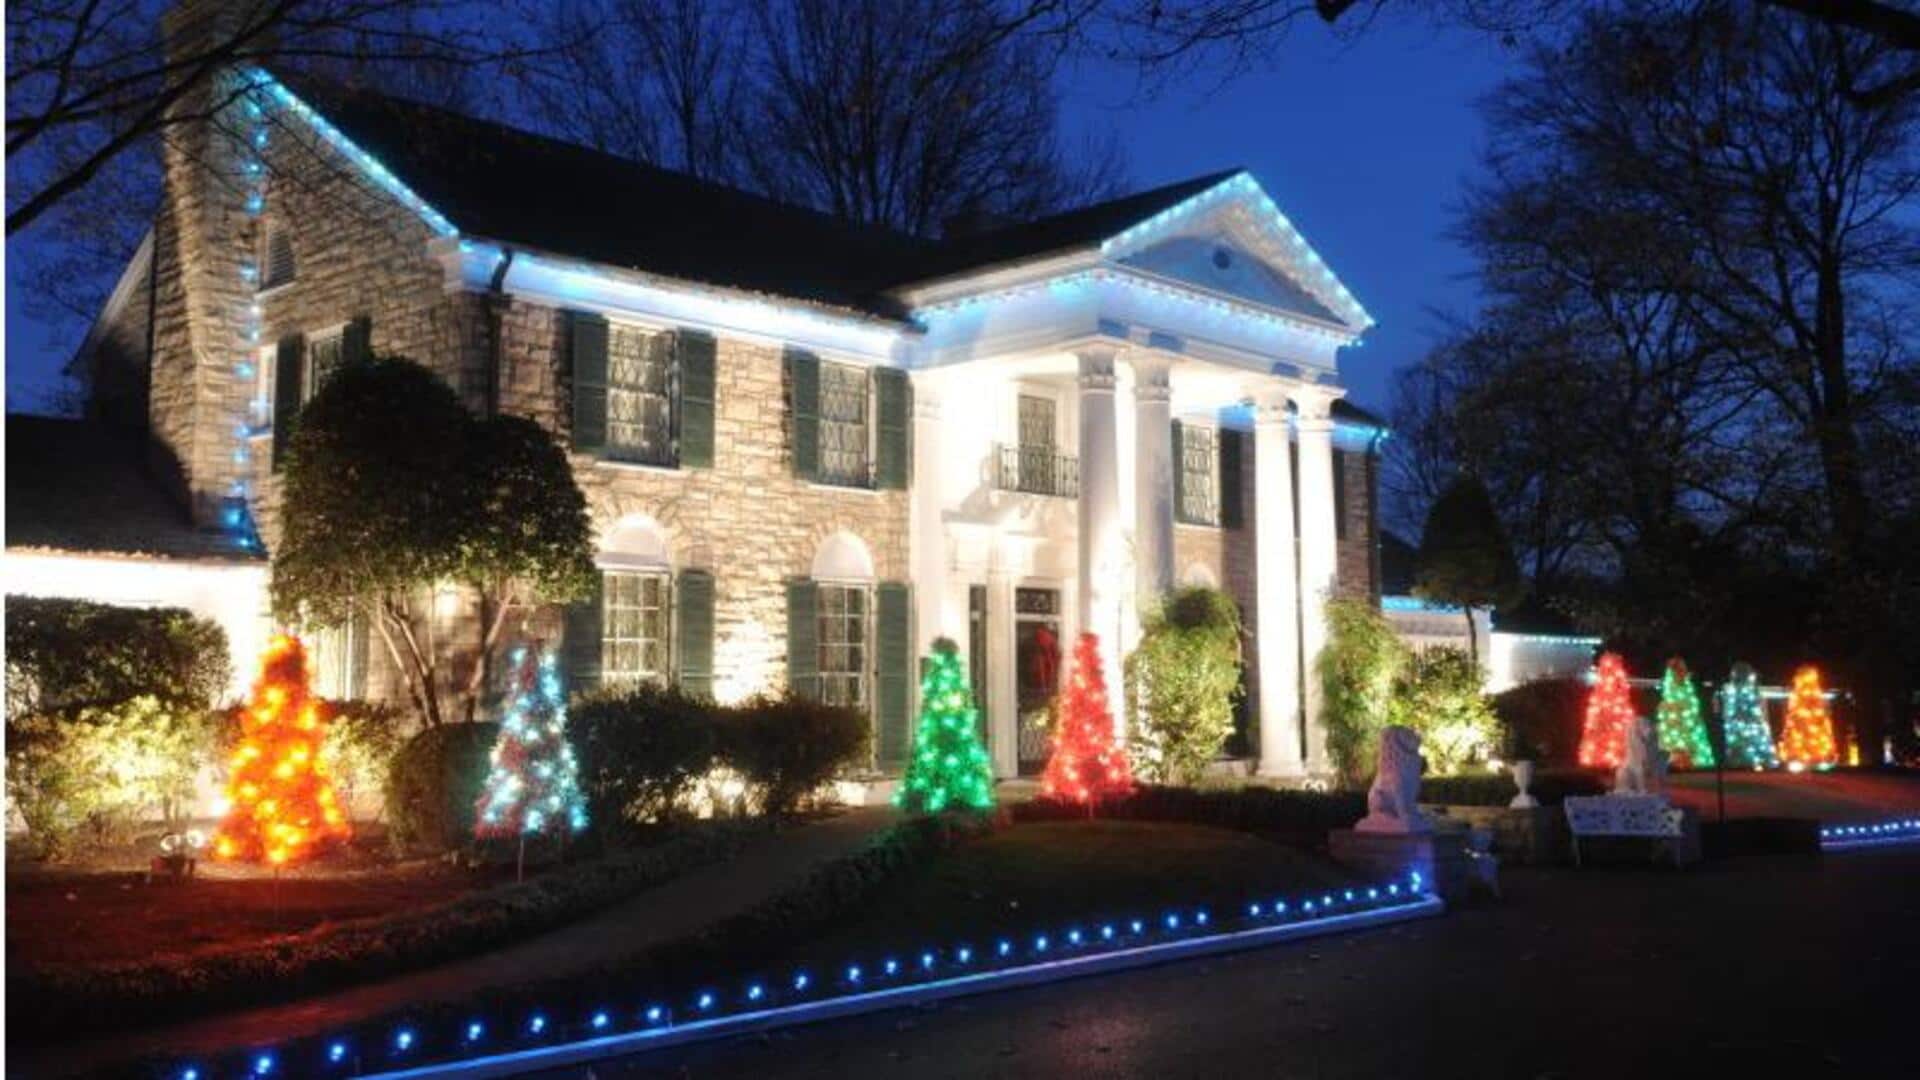 Foreclosure sale of Elvis Presley's home Graceland halted by judge